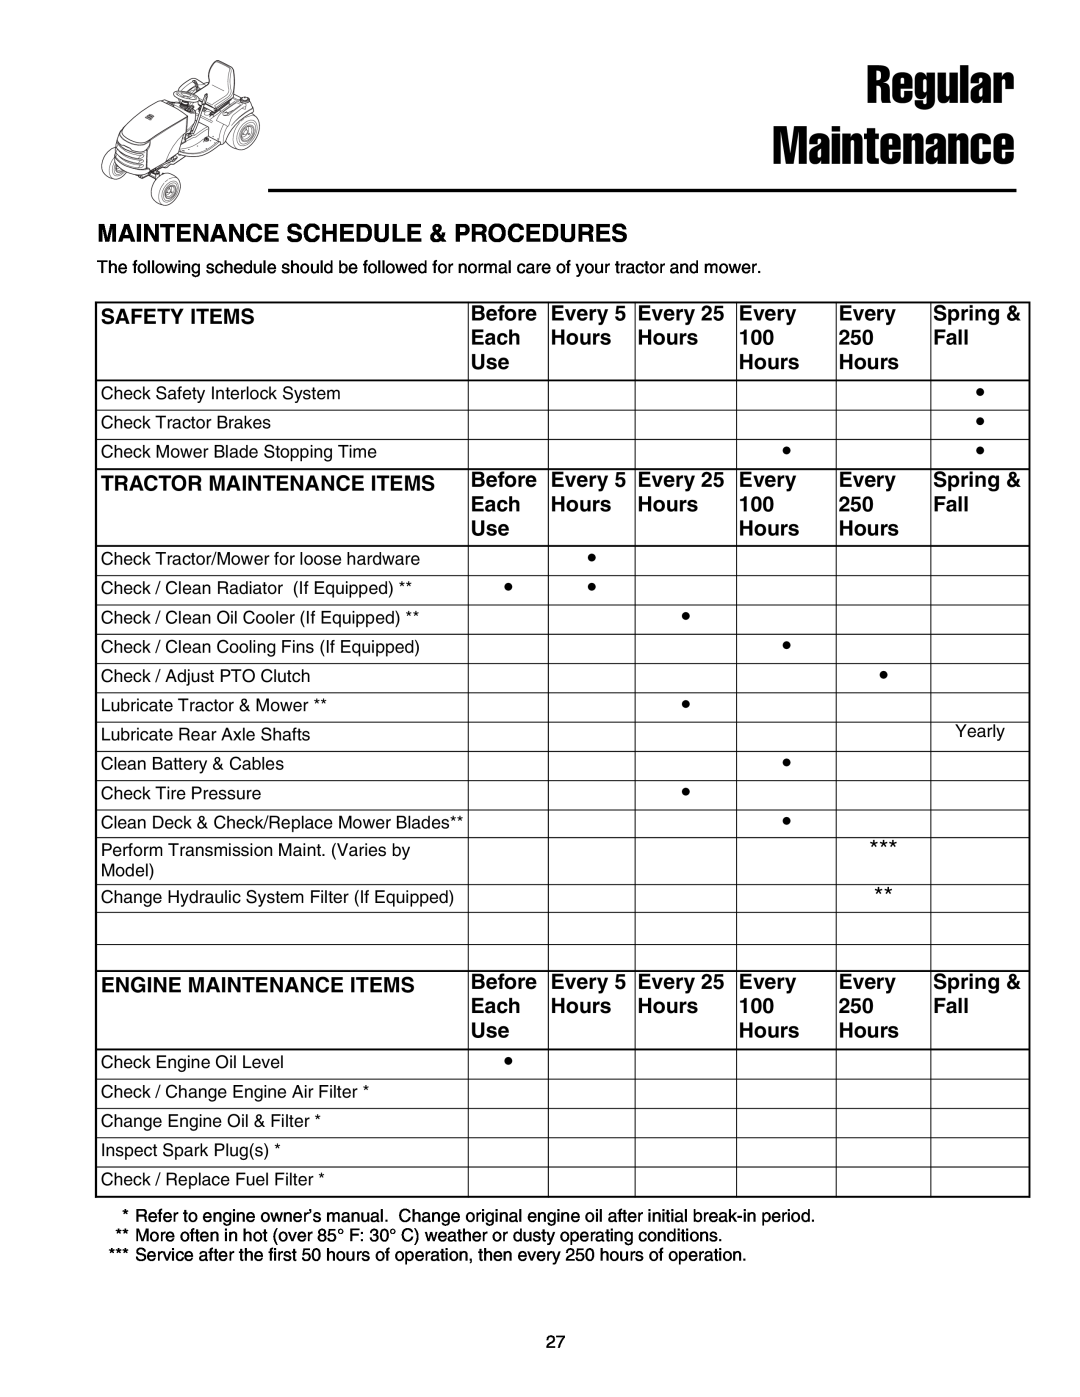 Snapper 1800, 2800, 500, 1700, 2700, 400 manual Regular Maintenance, Maintenance Schedule & Procedures 